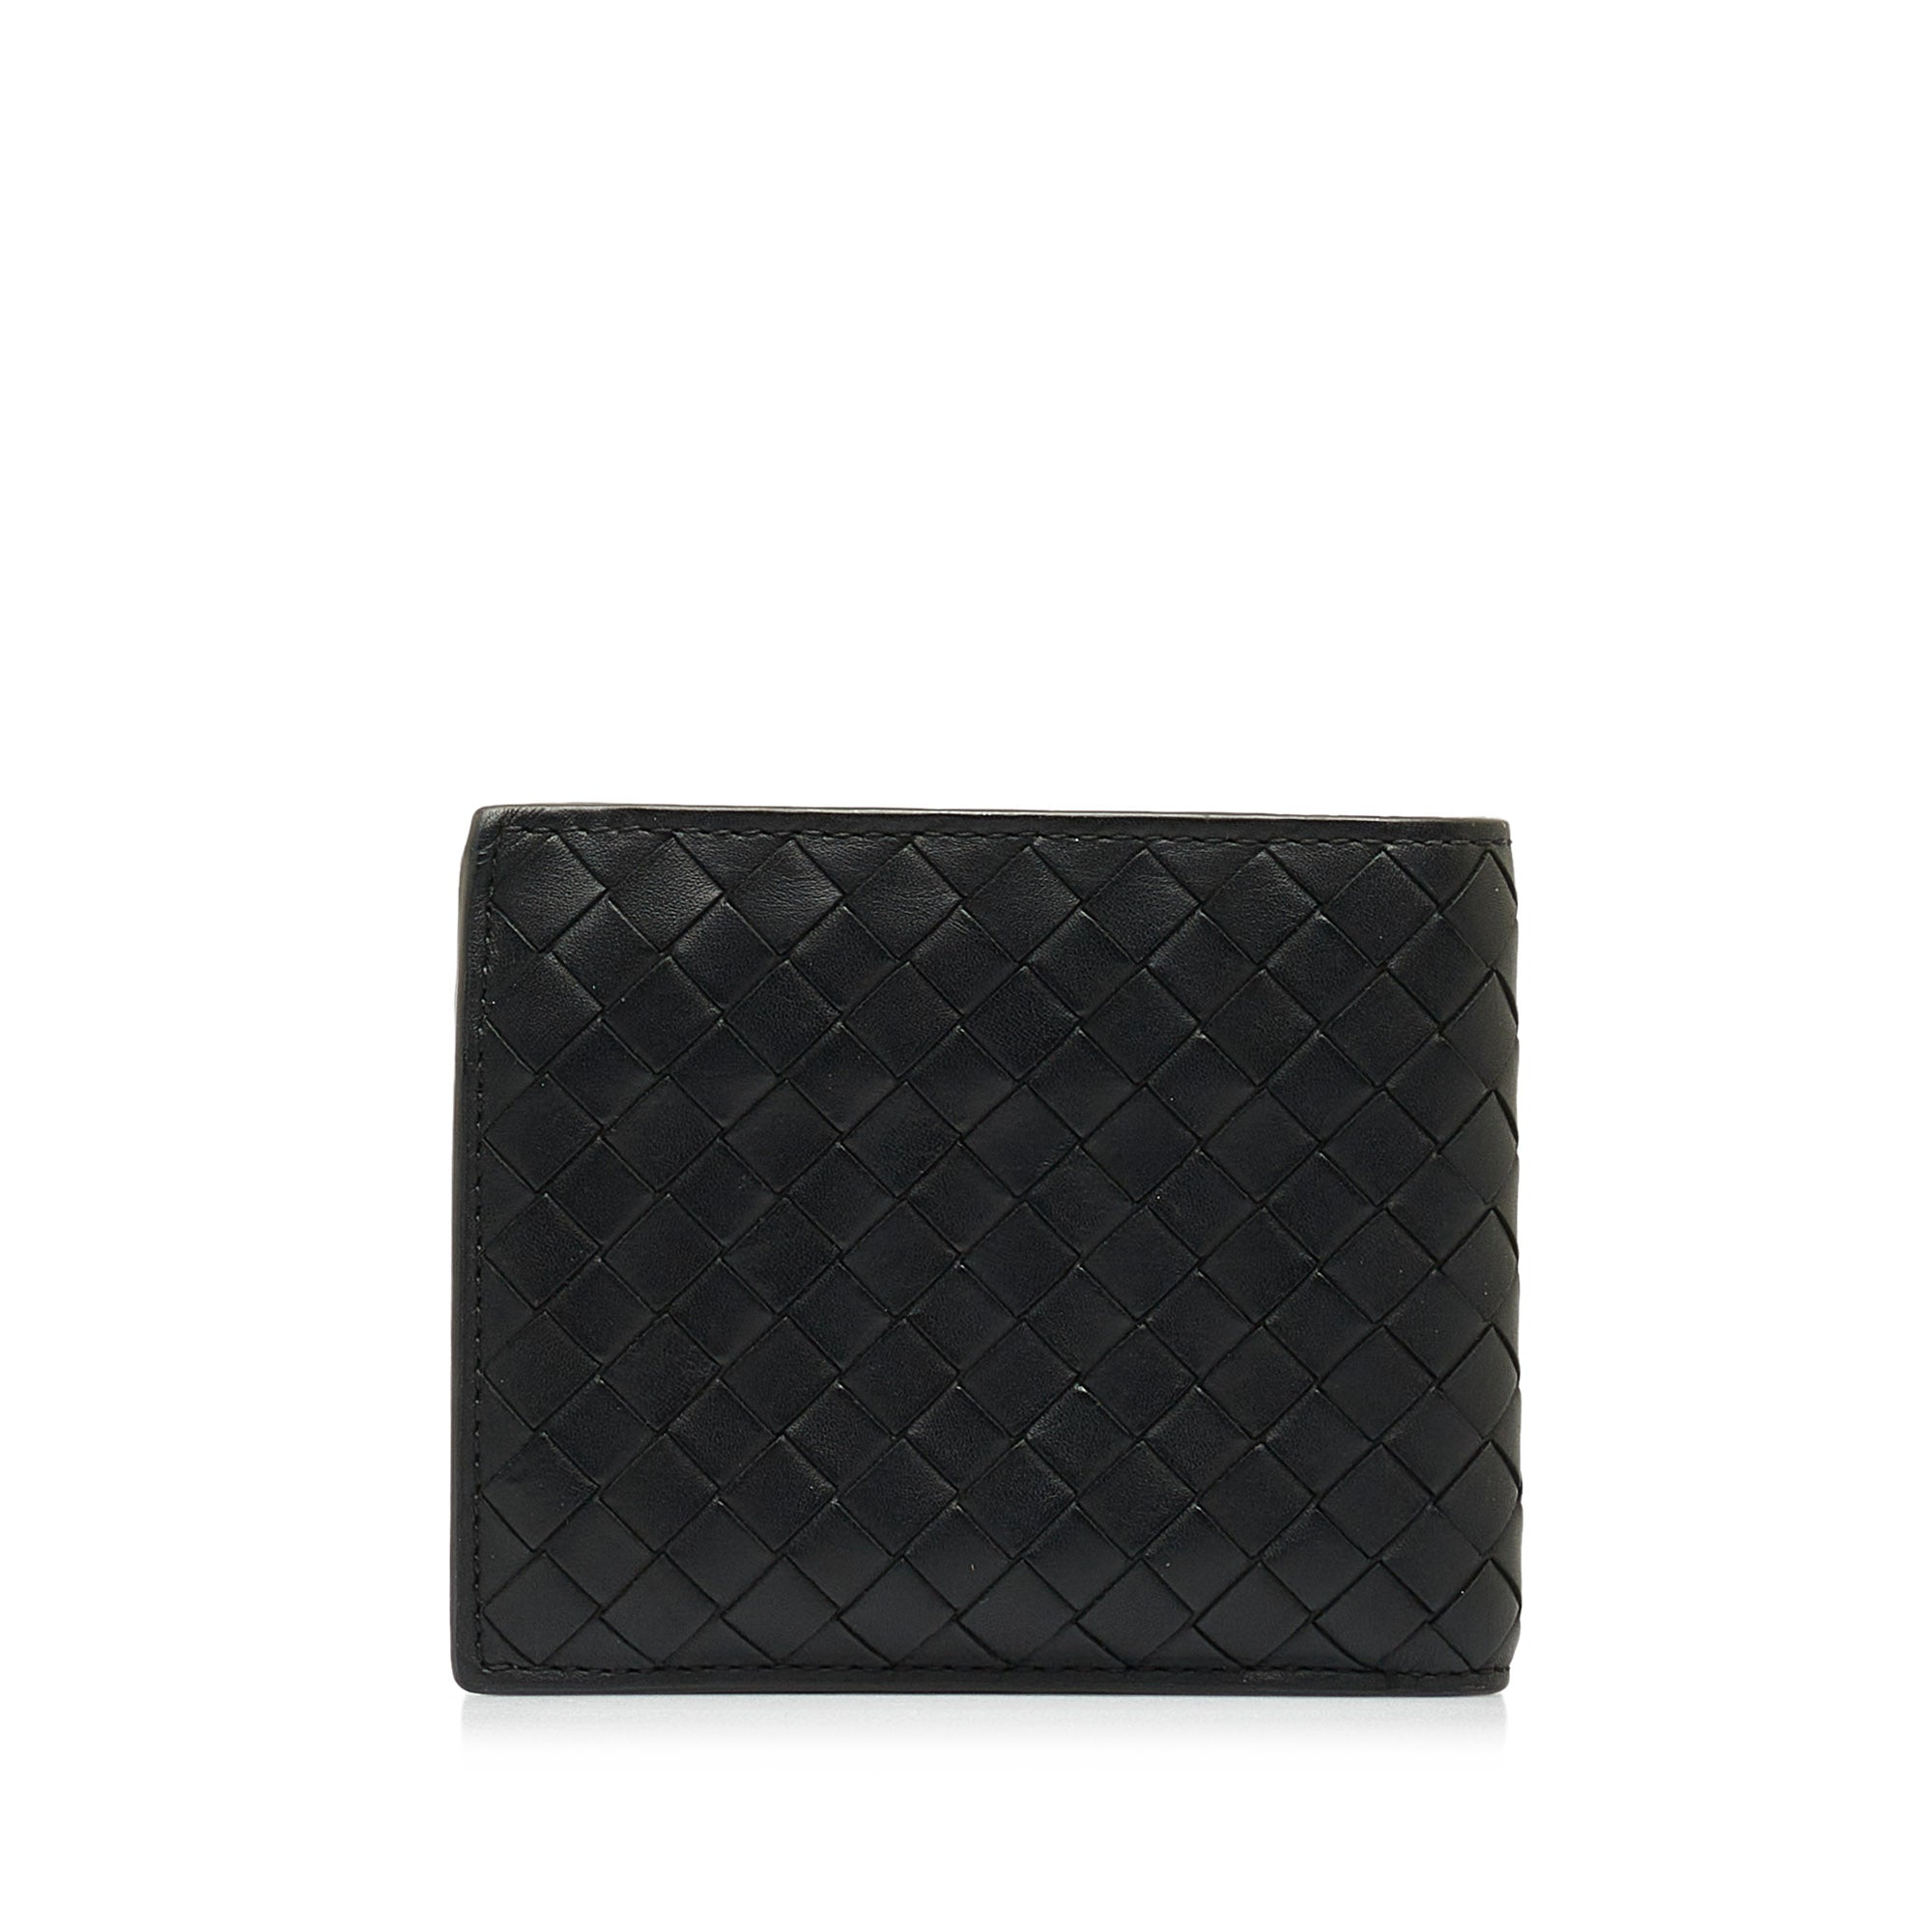 Bottega Veneta Intrecciato Pouch Bag Black in Leather with Gold-tone - US